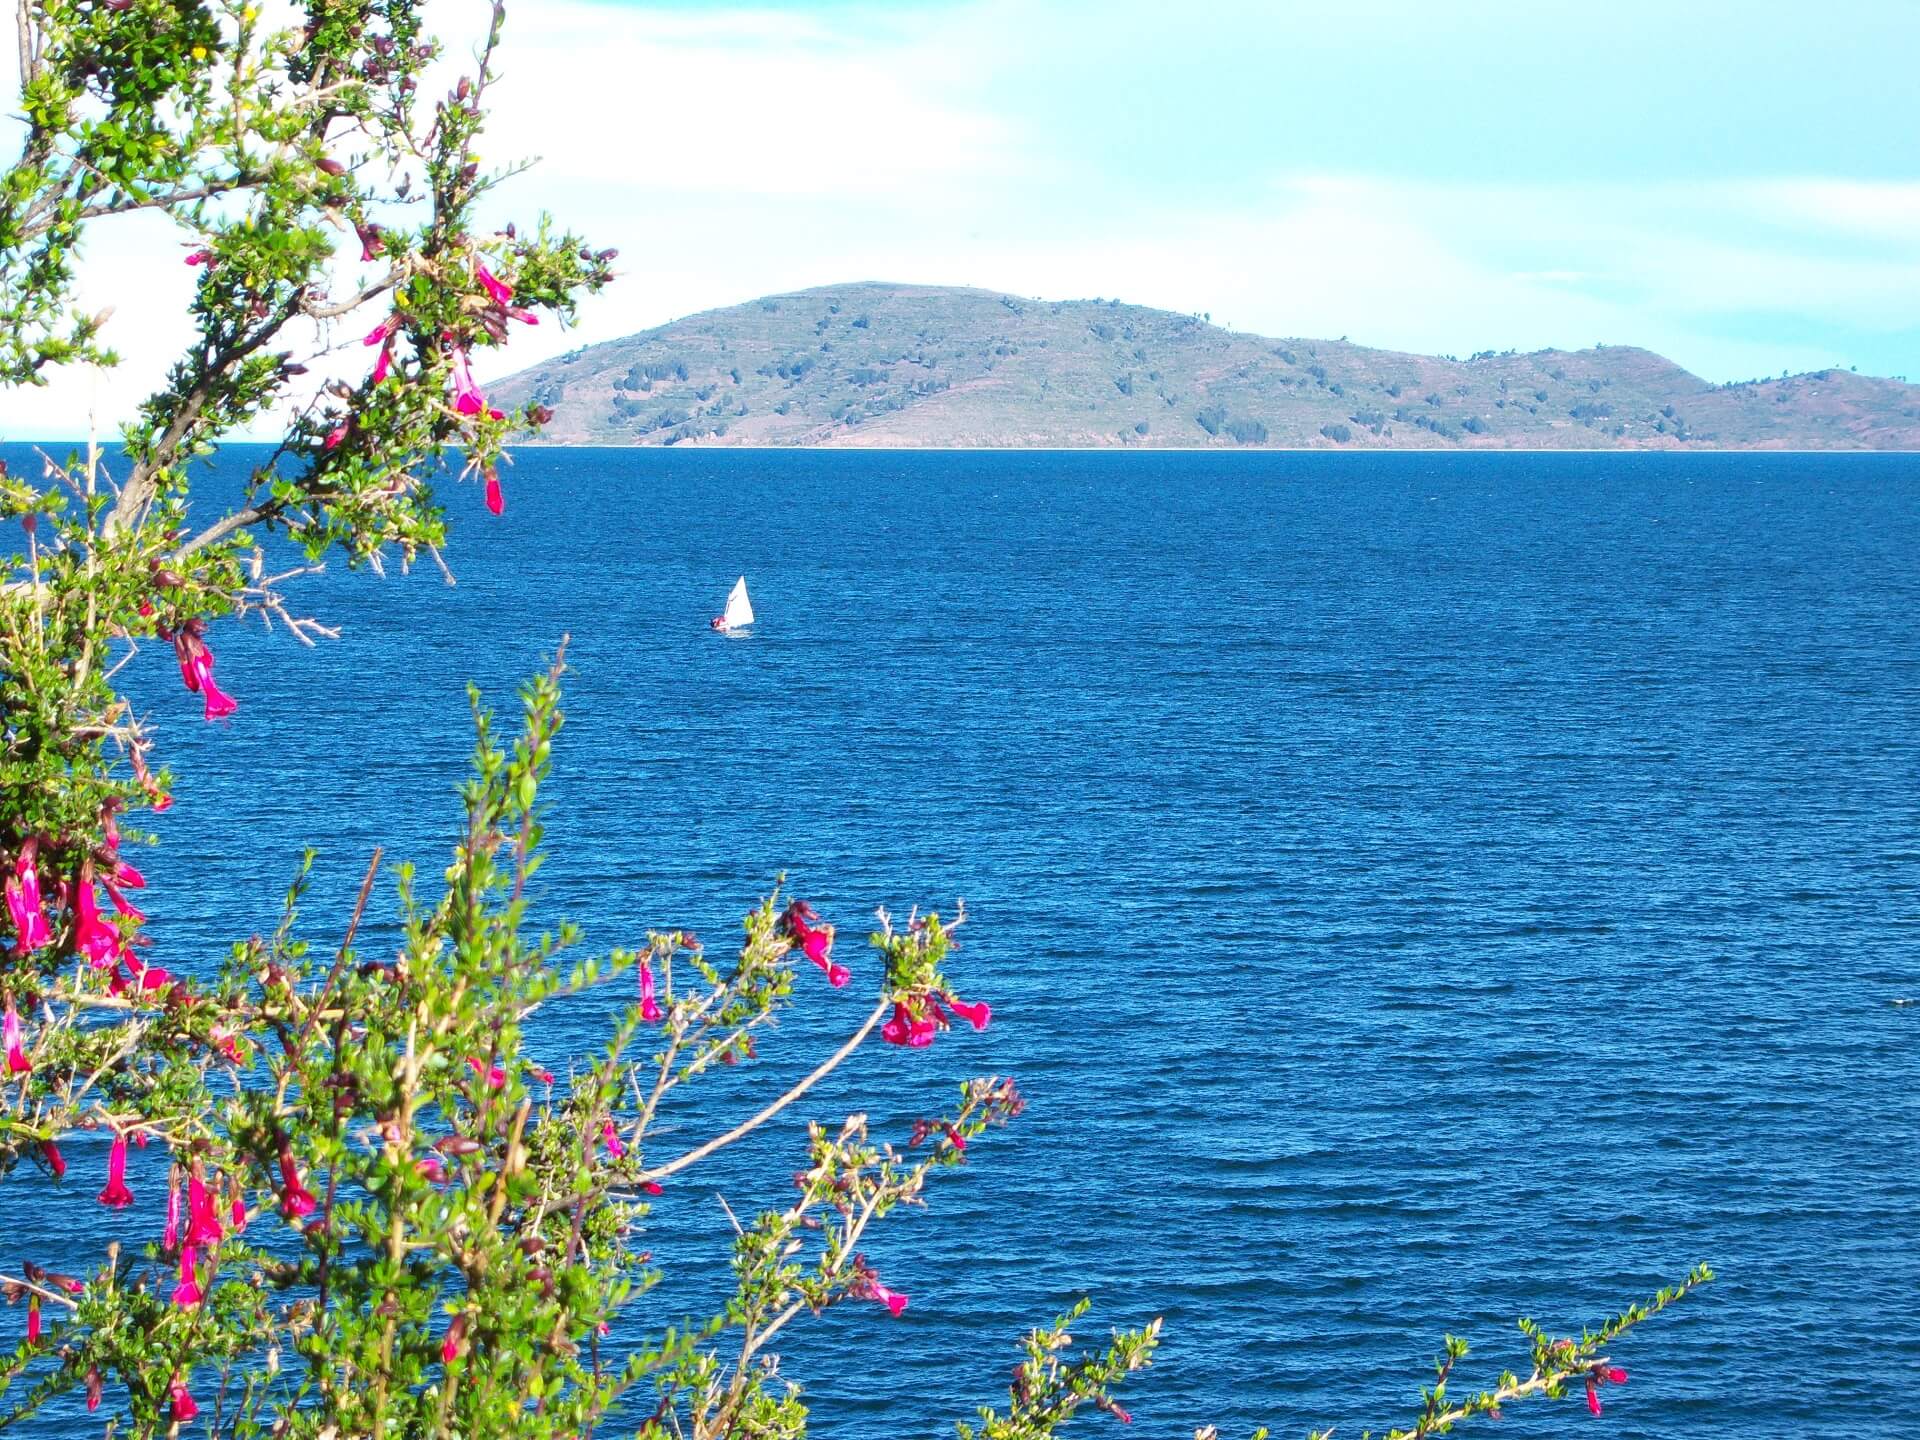 11A sailboat at Lake Titicaca. Visit Lake TIticaca in a unique way | RESPONSible Travel Peru